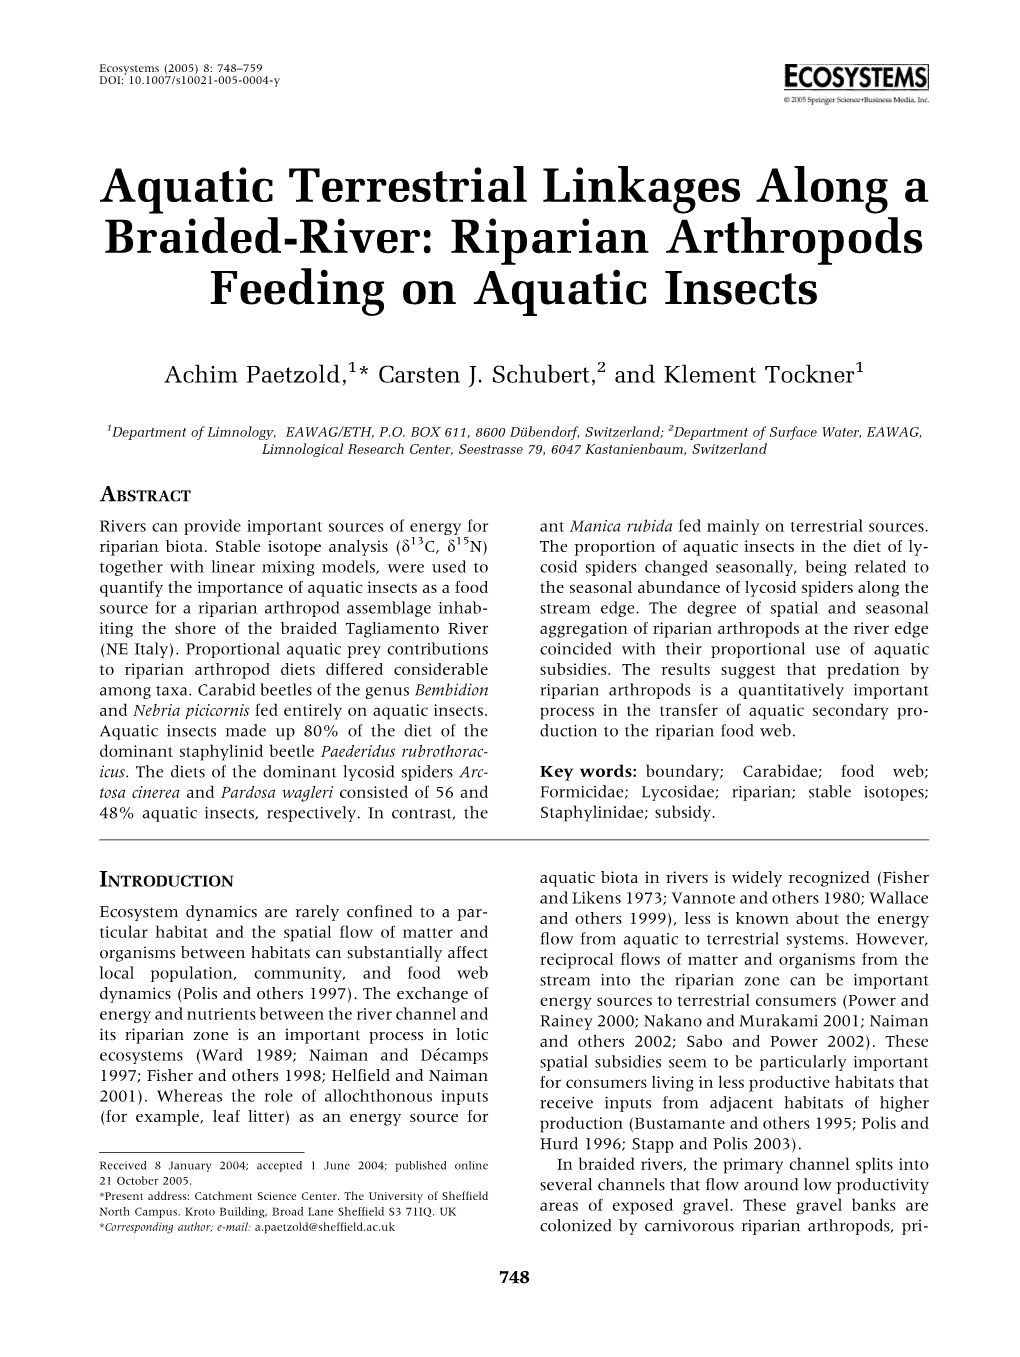 Aquatic Terrestrial Linkages Along a Braided-River: Riparian Arthropods Feeding on Aquatic Insects